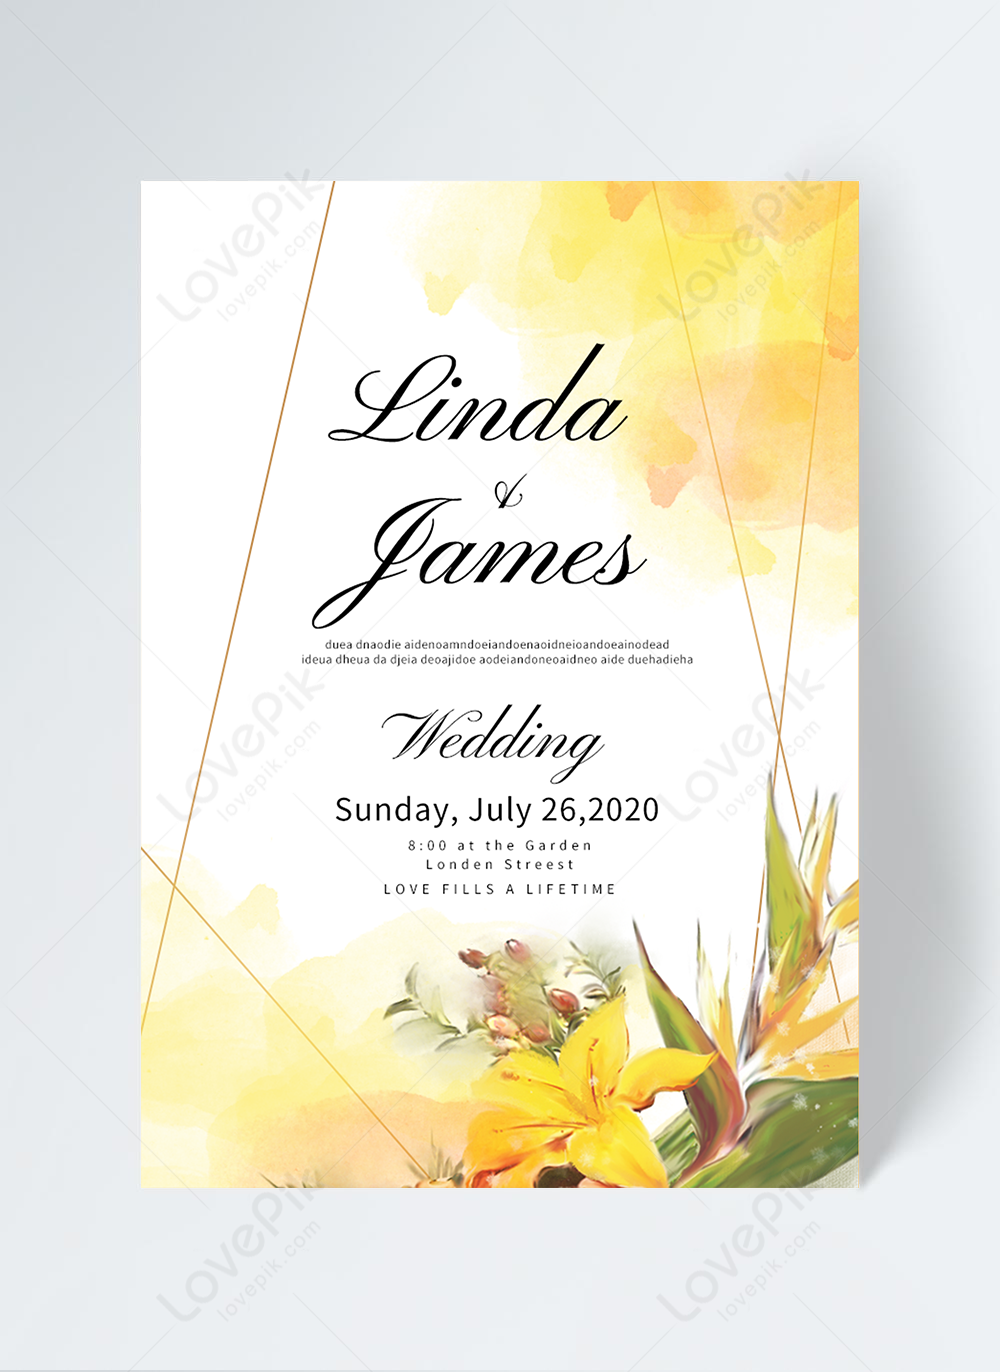 Design Your Wedding Invitation with Wedding Invitation Yellow